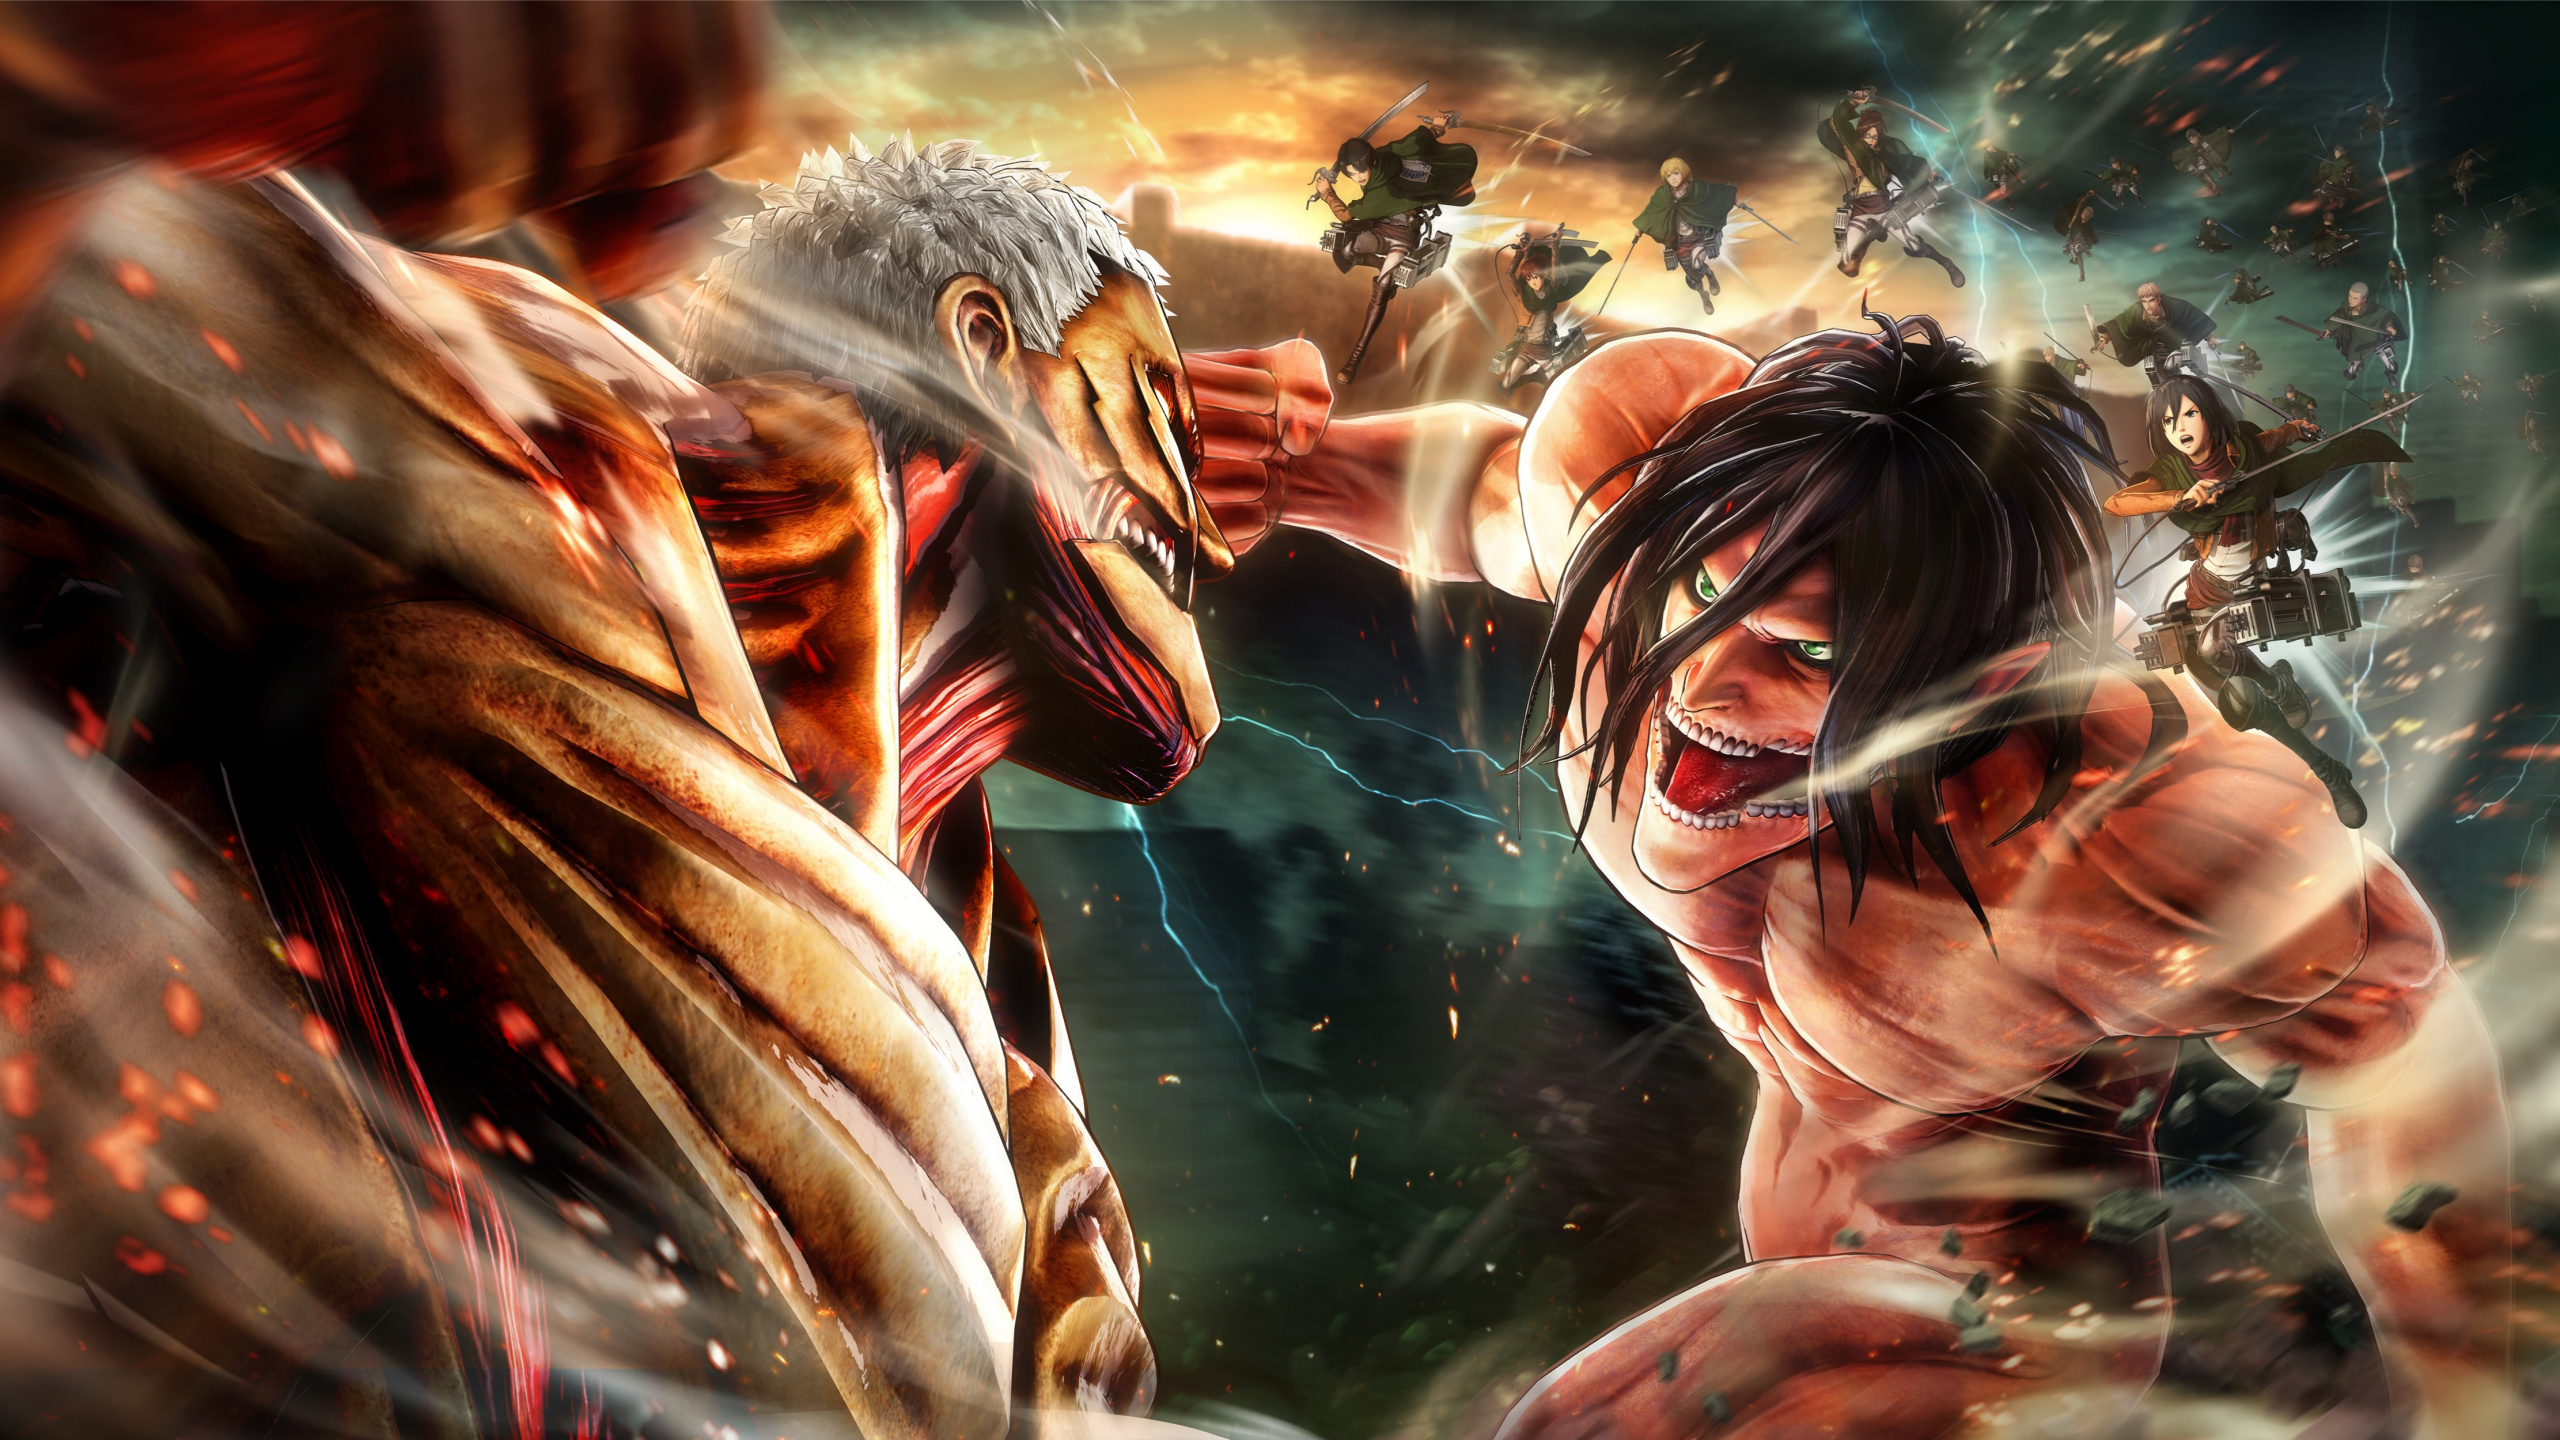 Обои Attack on Titan 2, нападение на титан, koei и tecmo игры, мифология, аниме в разрешении 2560x1440